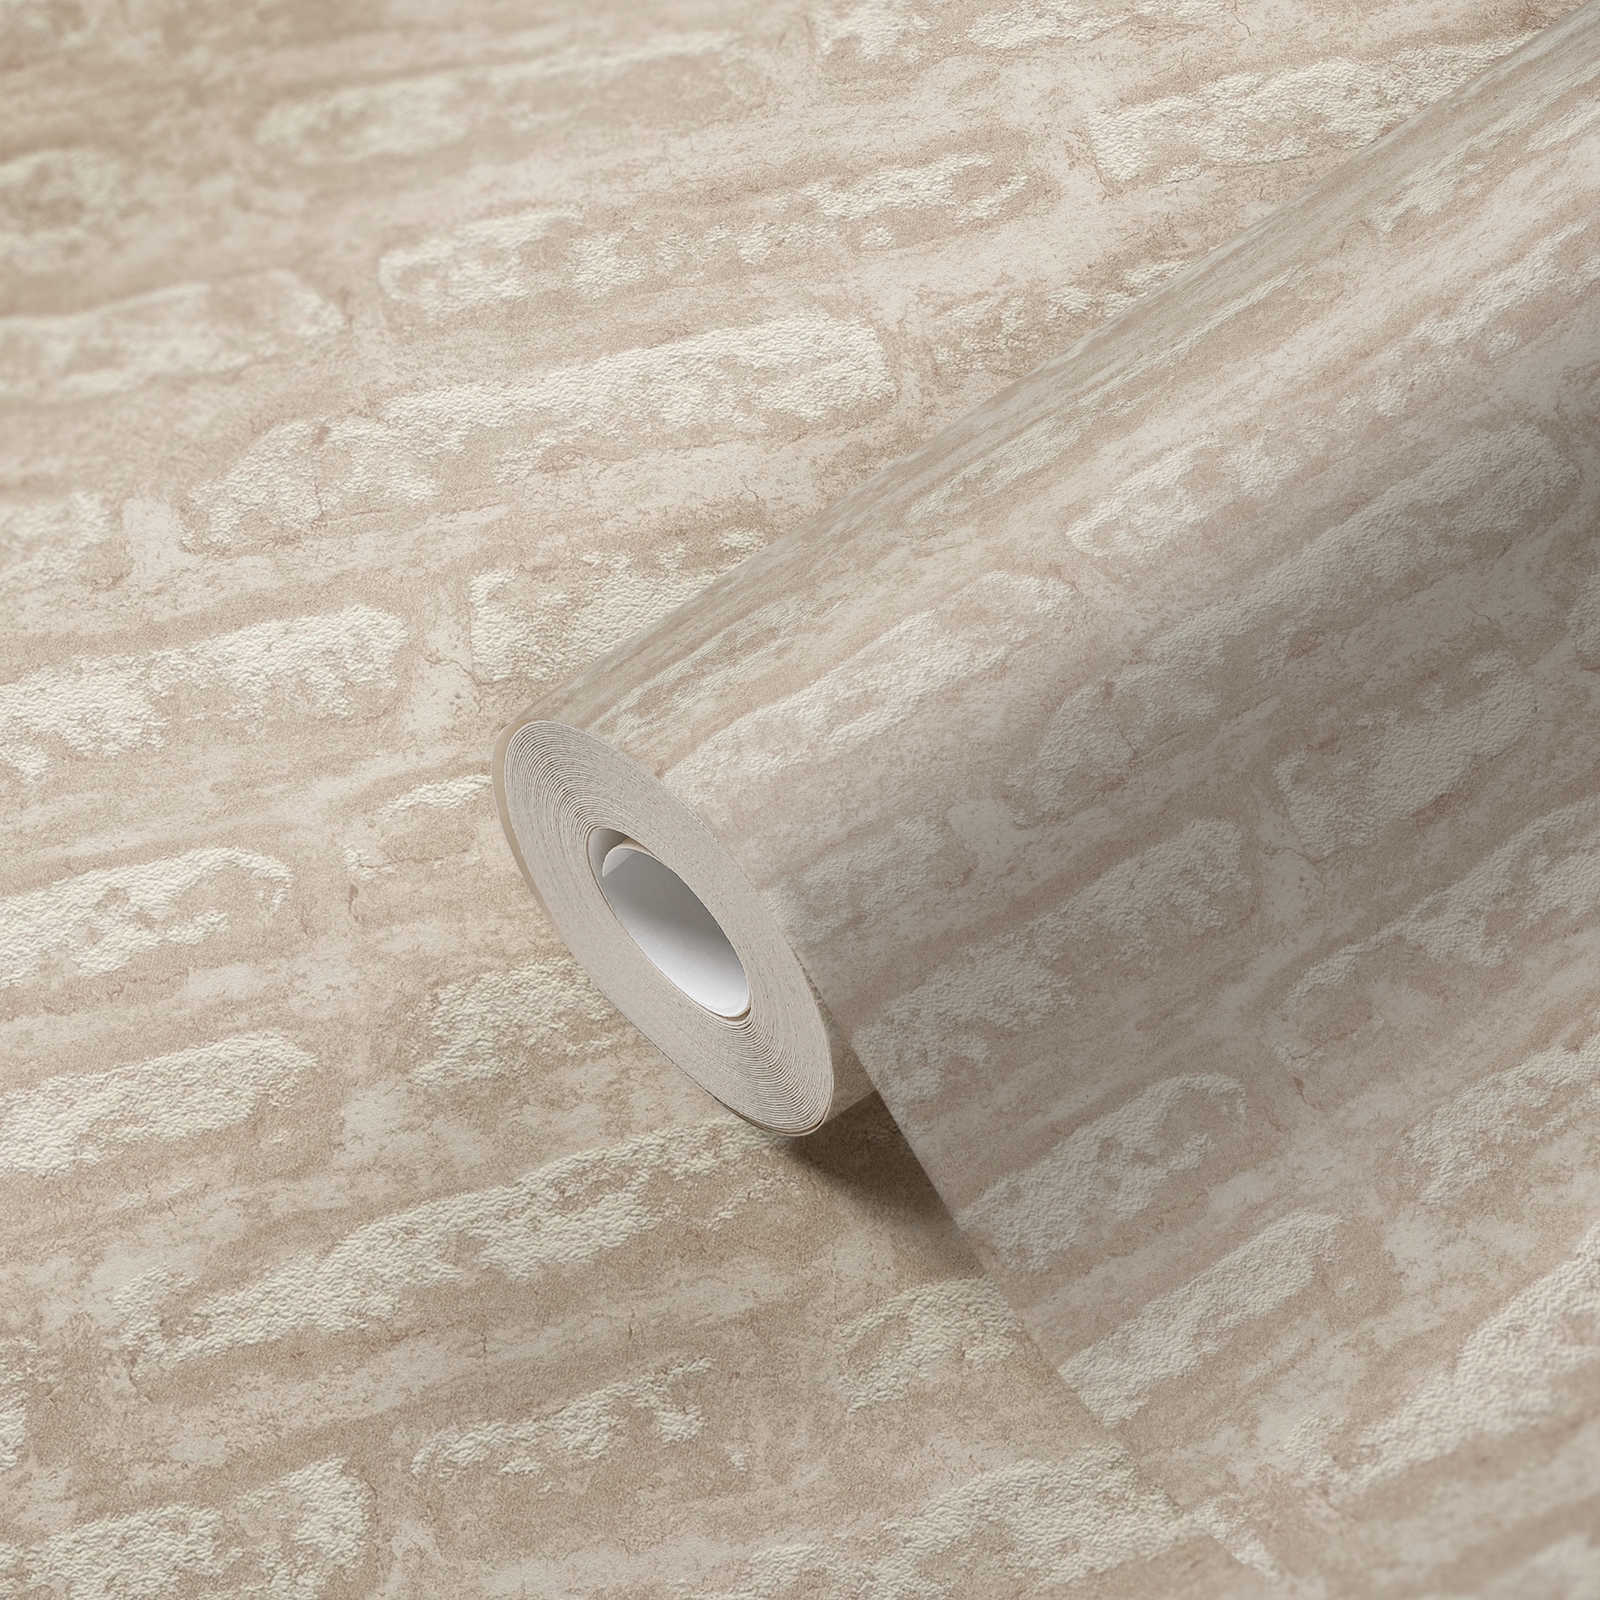             Gemusterte Tapete abstrakt matt – Hellbraun, Weiß
        